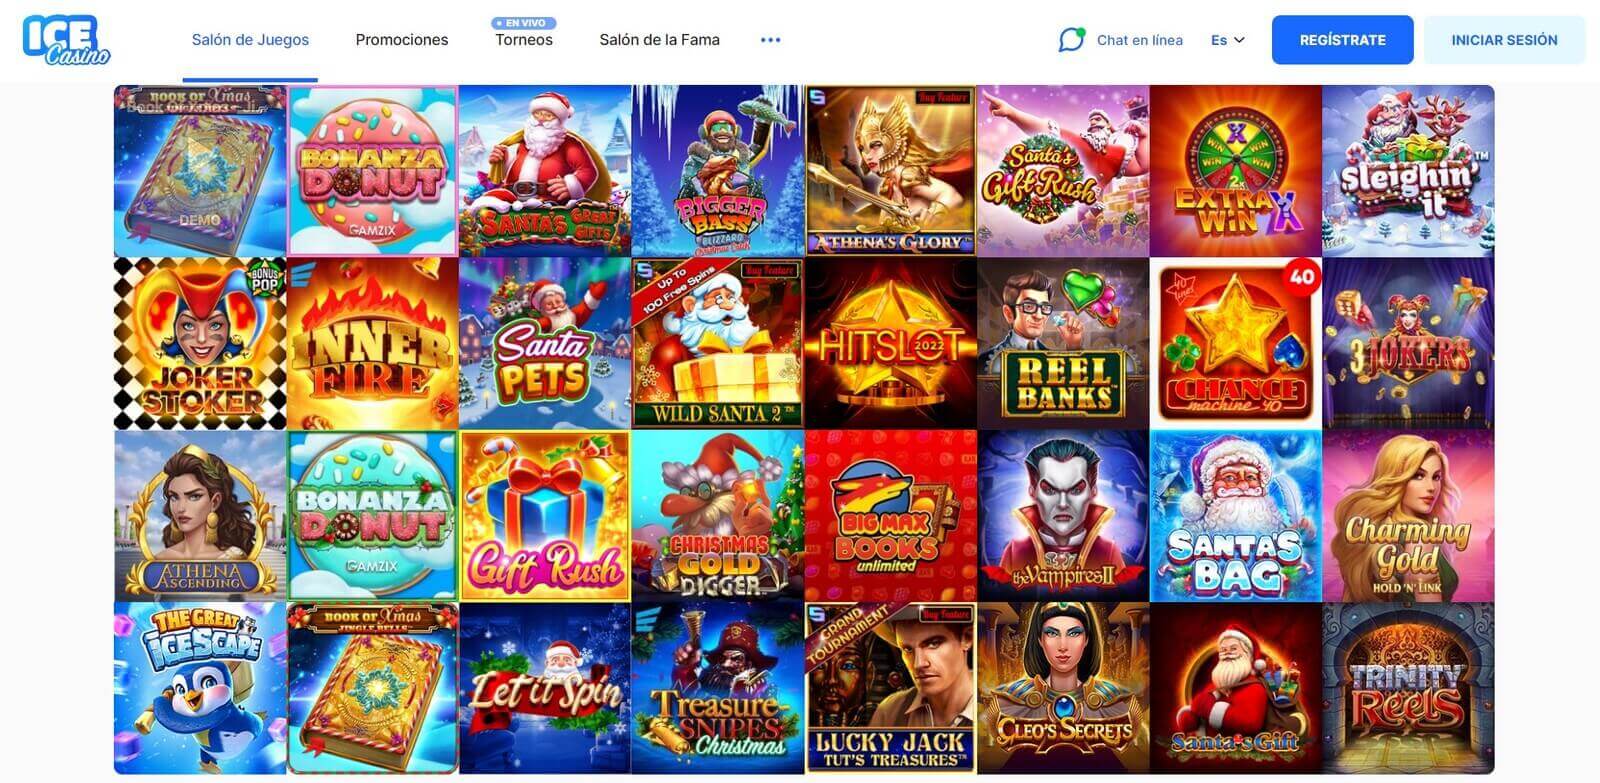 Tragaperras de Ice Casino online en Latinoamérica